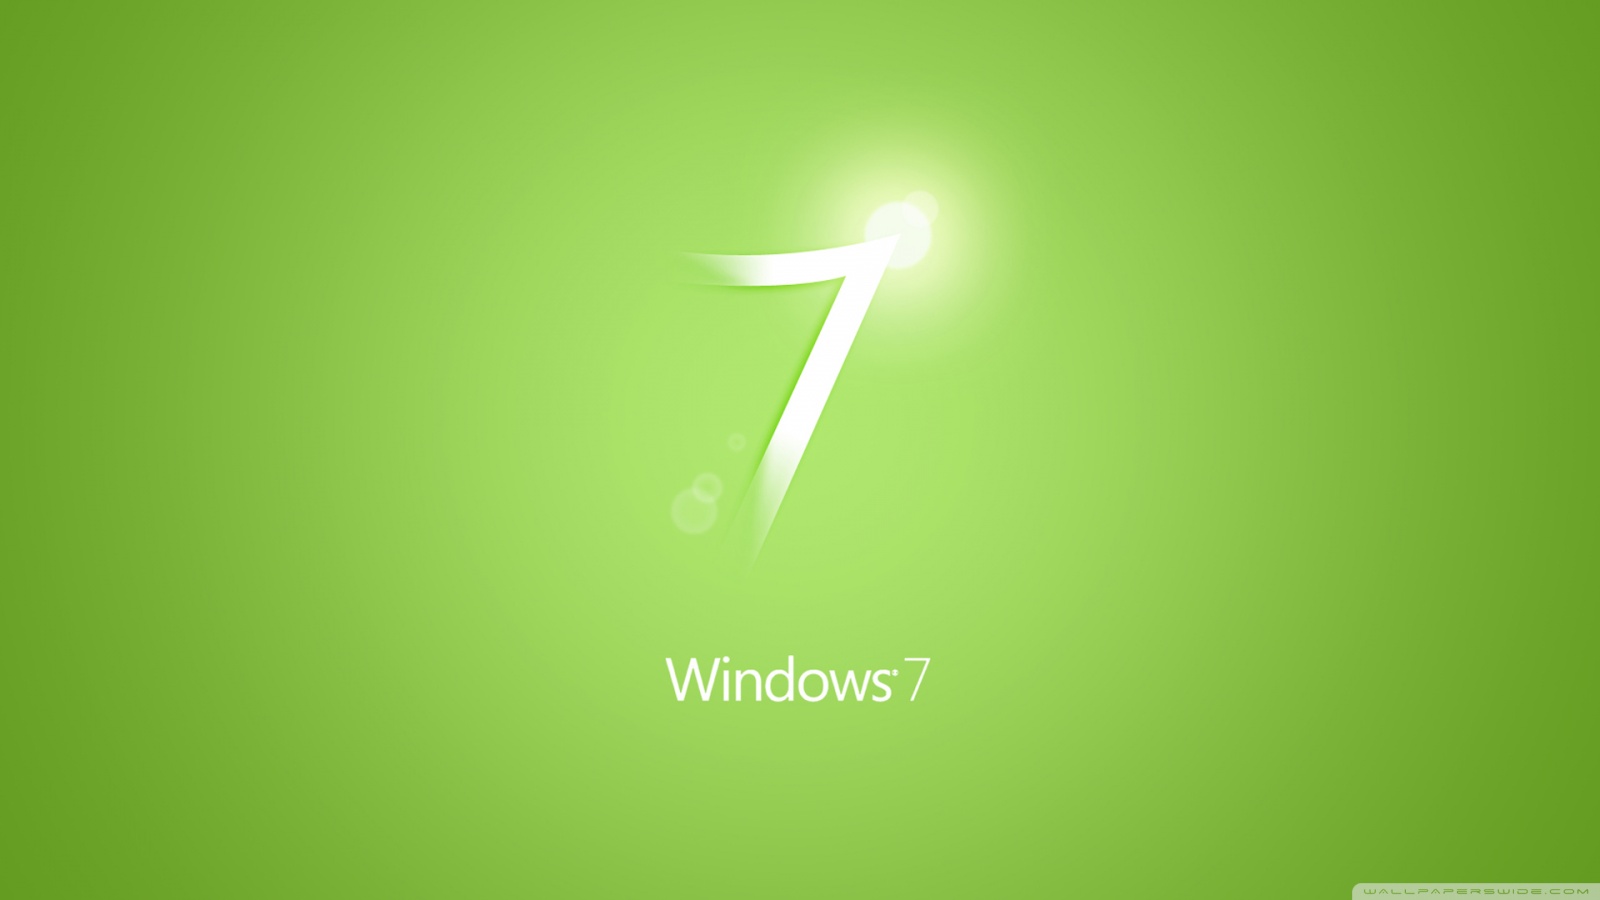 Windows 7 Green Ultra HD Desktop Background Wallpaper for 4K UHD TV, Widescreen & UltraWide Desktop & Laptop